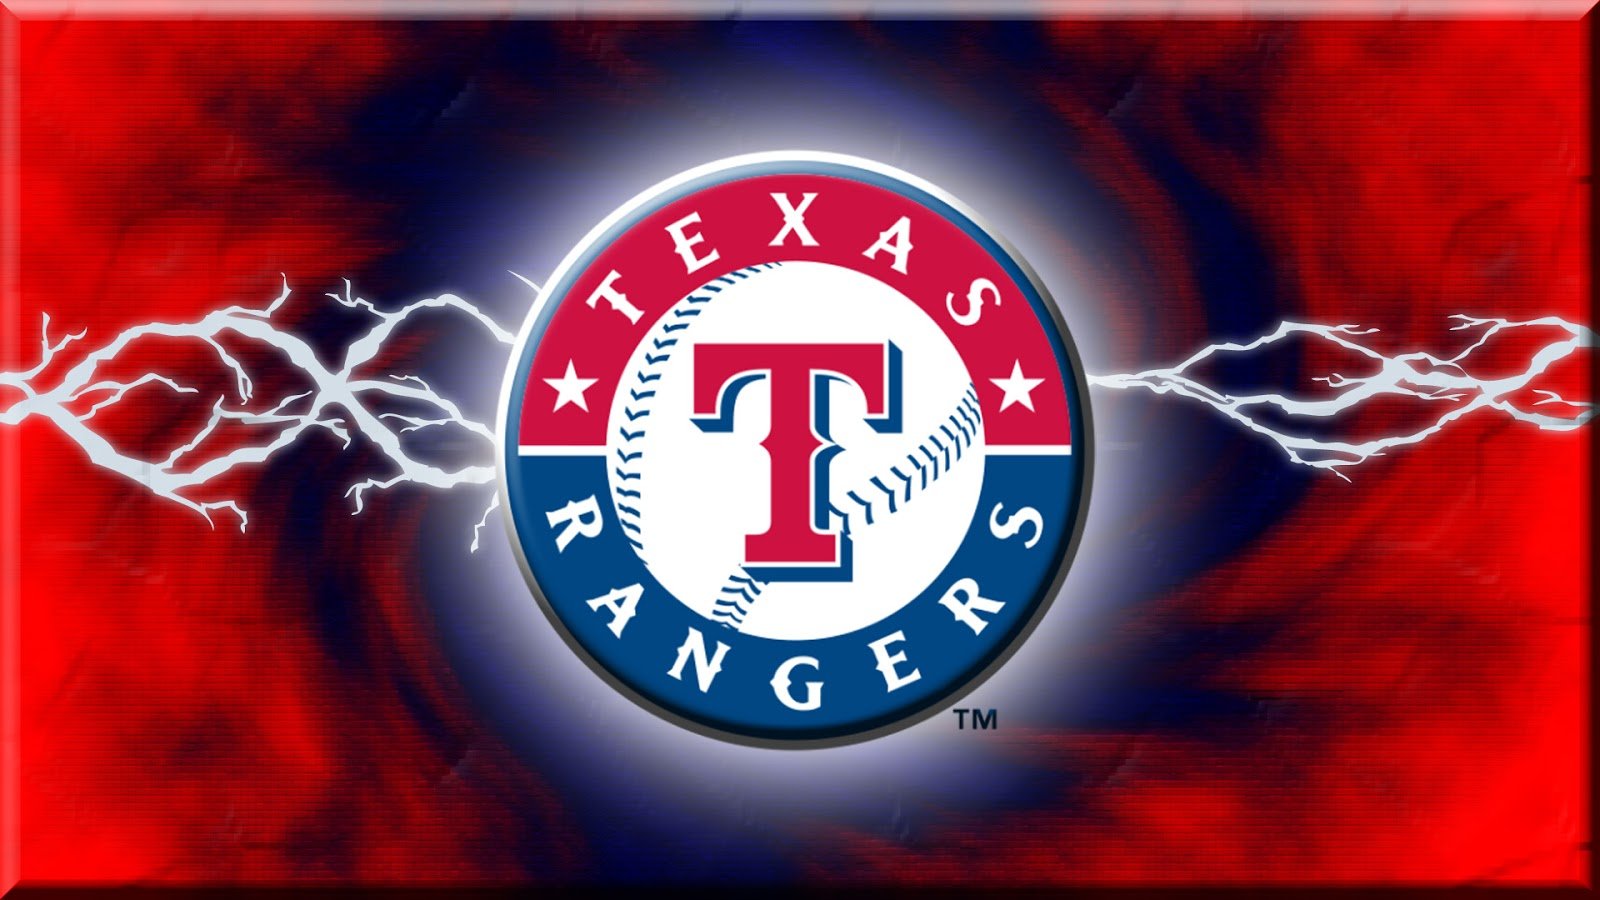 Texas Rangers Club